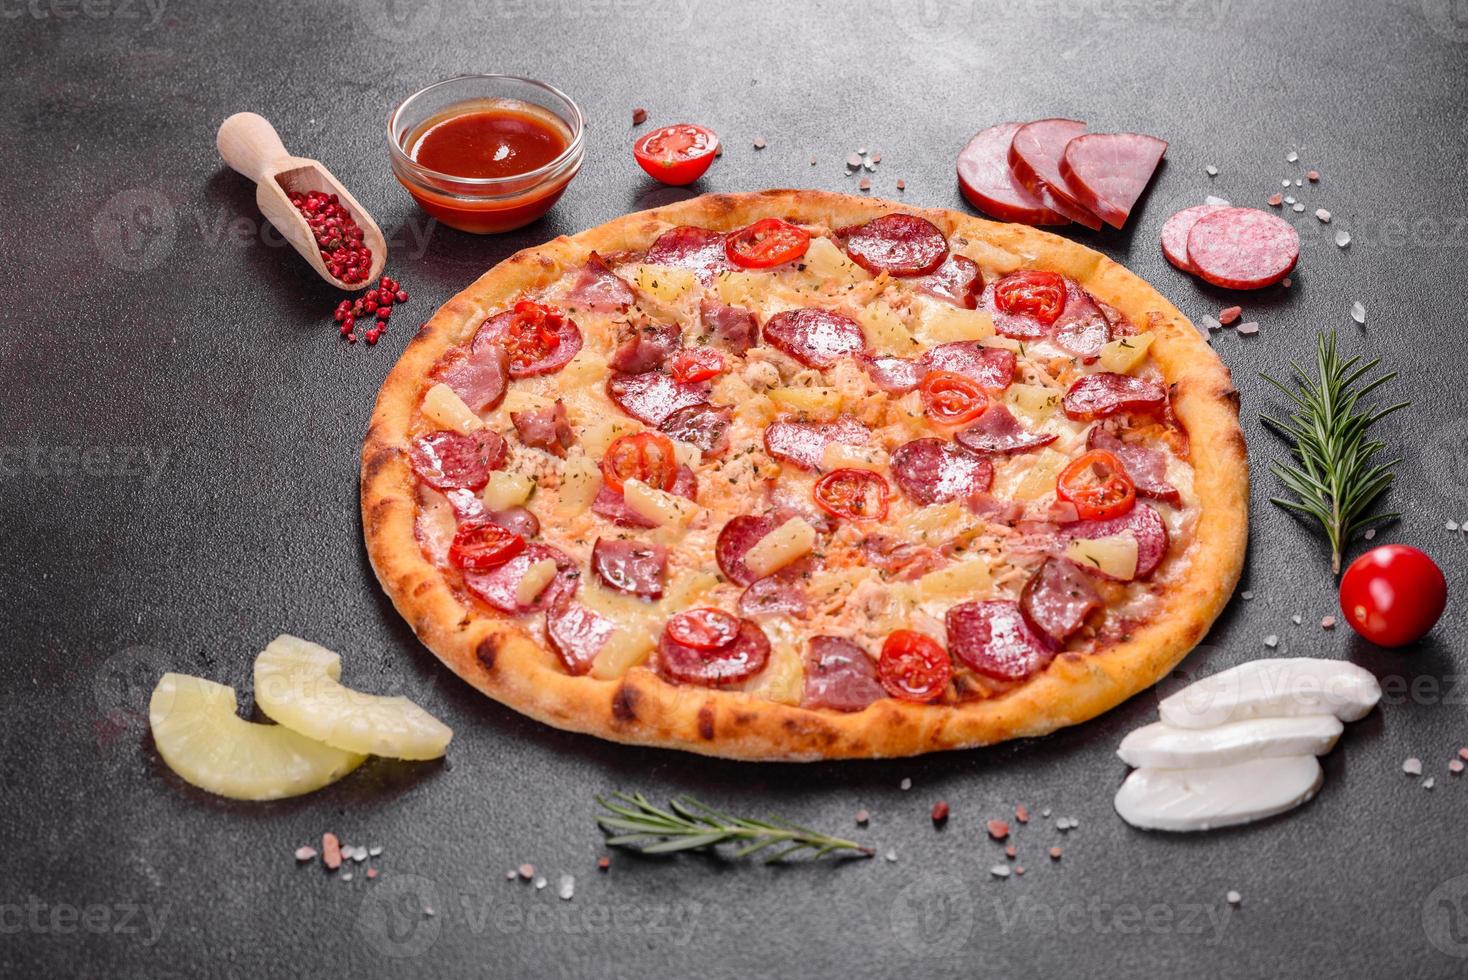 pizza de pepperoni con queso mozzarella, salami, jamón foto